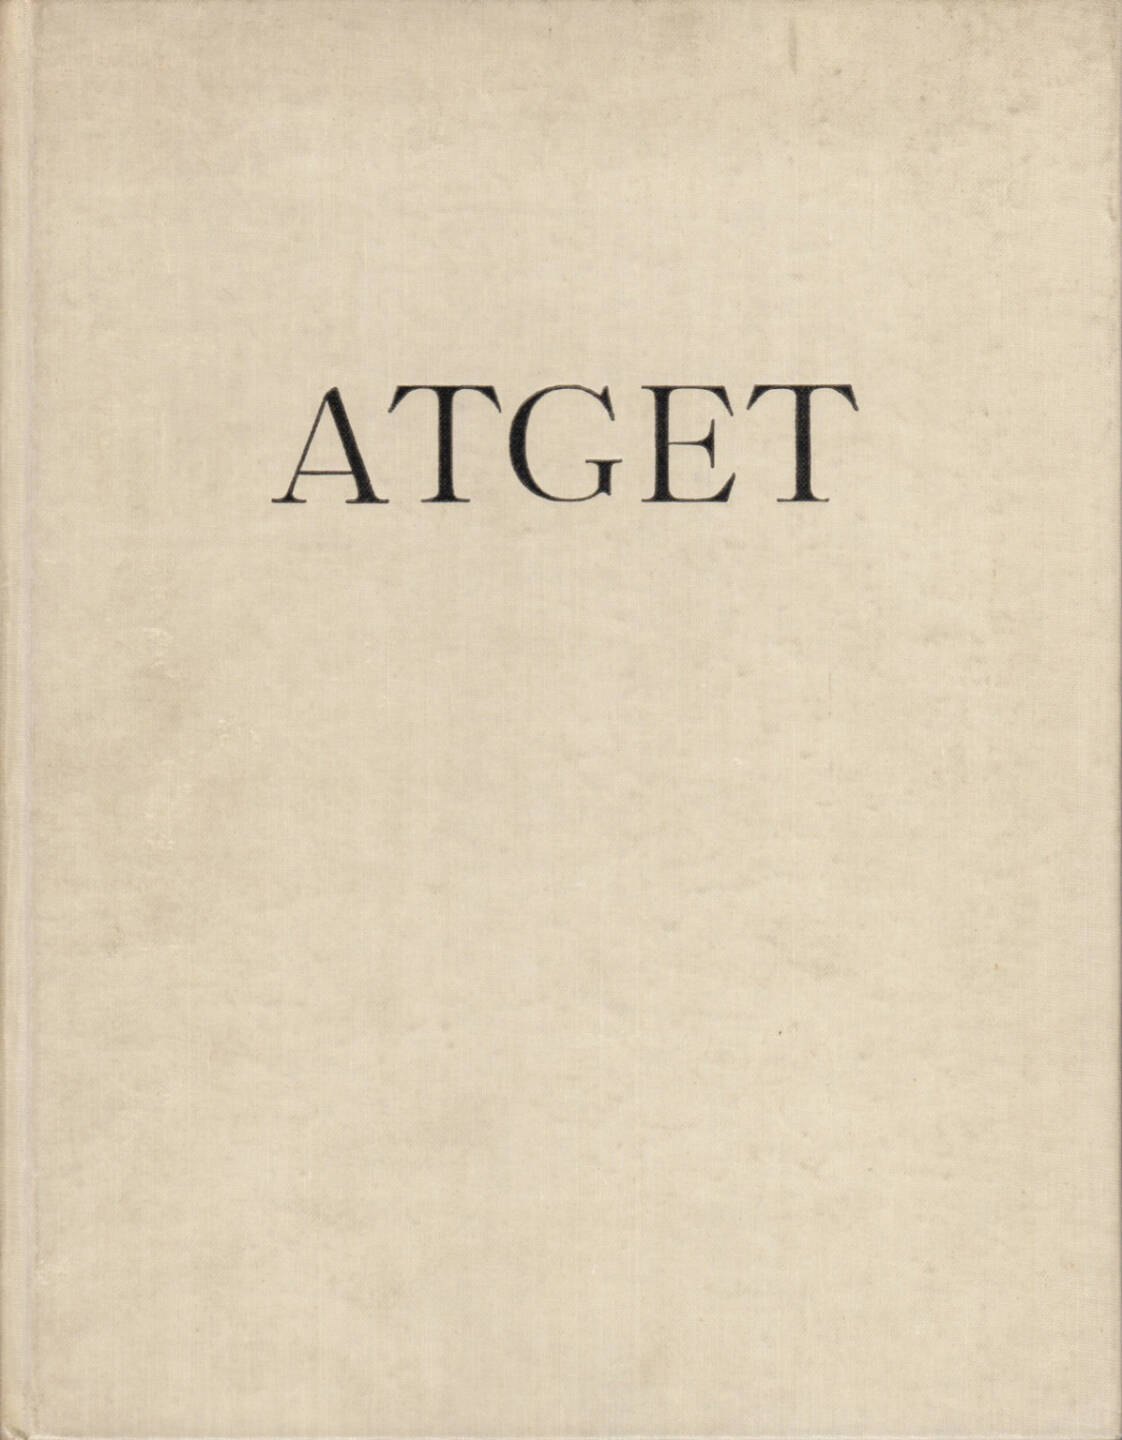 Eugene Atget - Lichtbilder 450-700 Euro, http://josefchladek.com/book/eugene_atget_-_lichtbilder